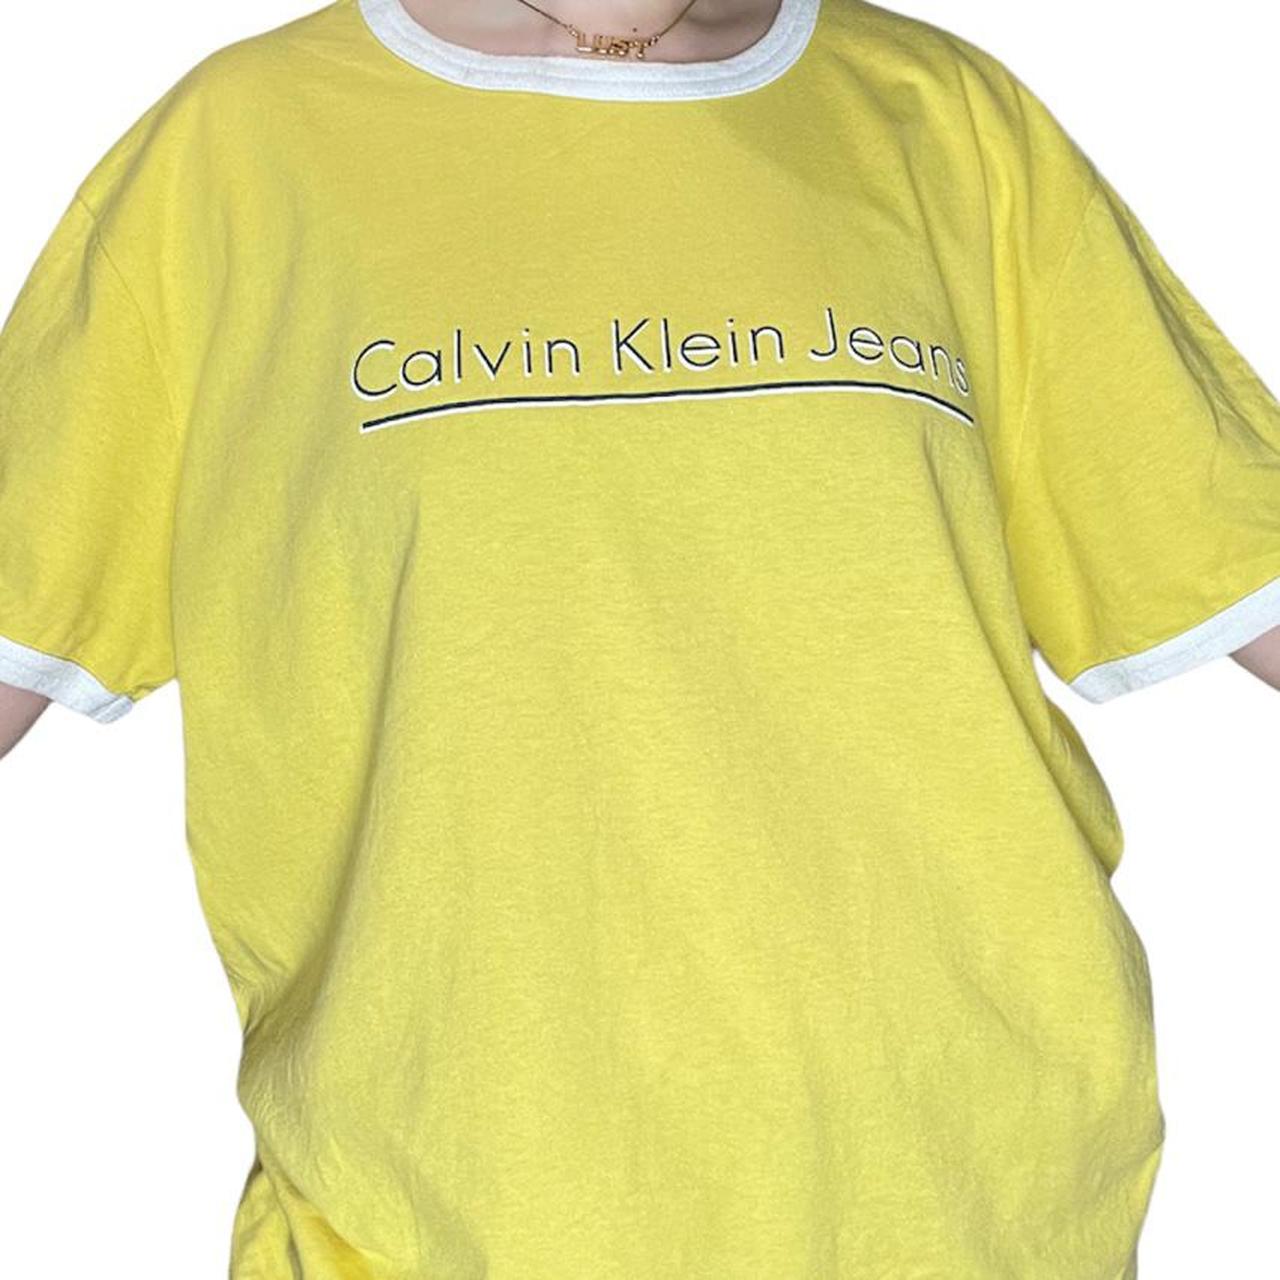 🛹 00s Calvin Klein yellow ringer tee 🛹 bright yellow... - Depop